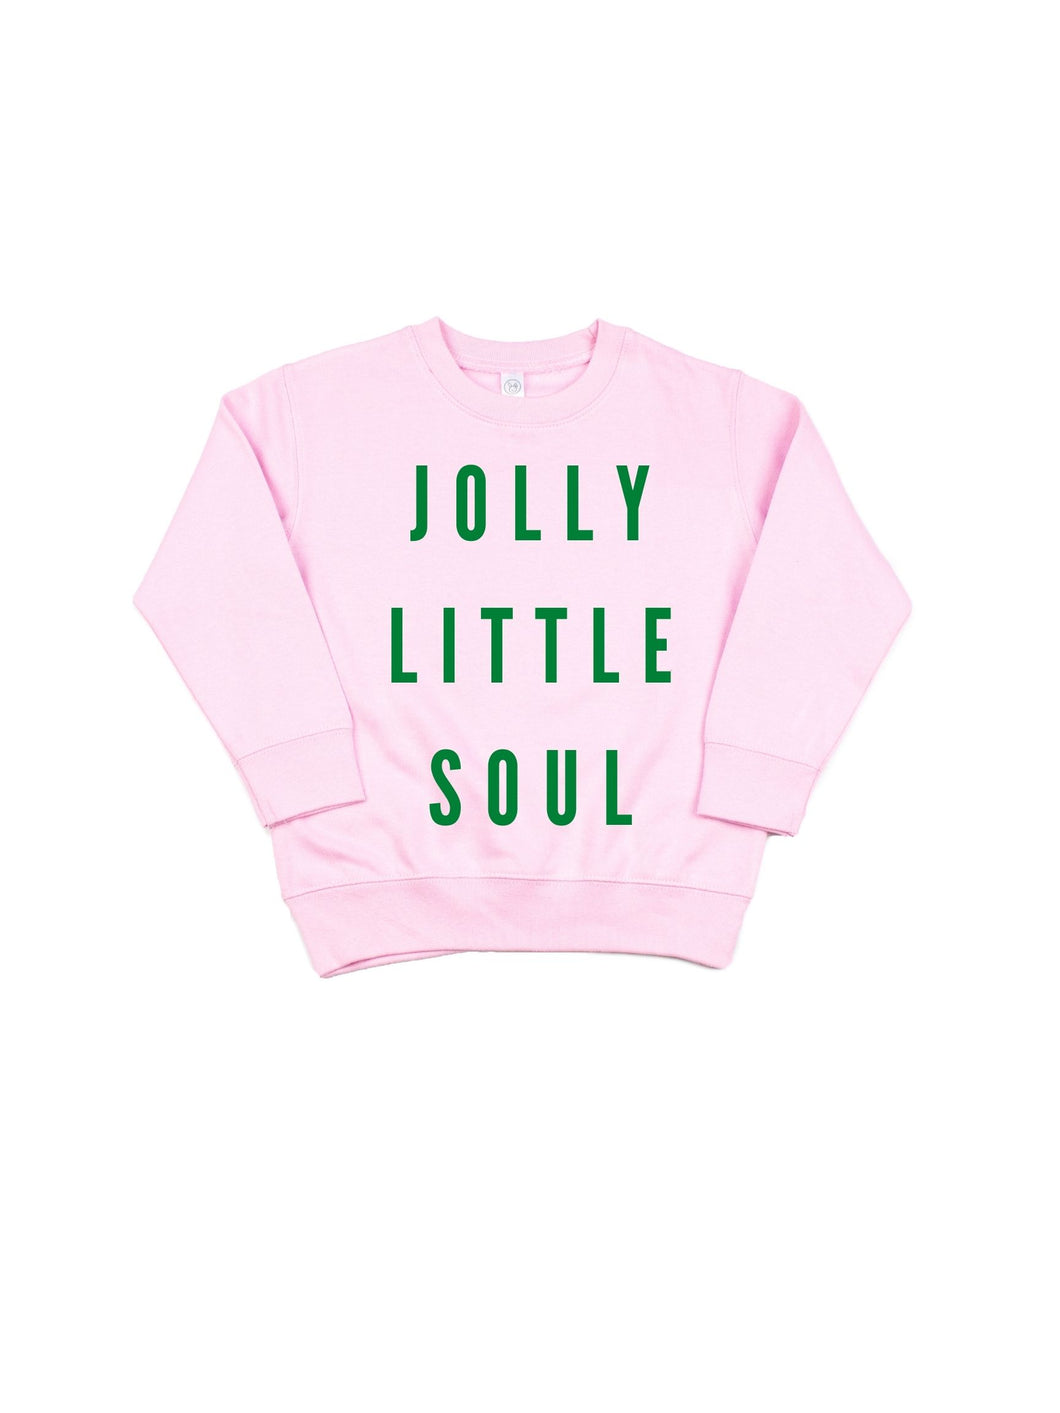 Jolly little soul- Baby/ Toddler